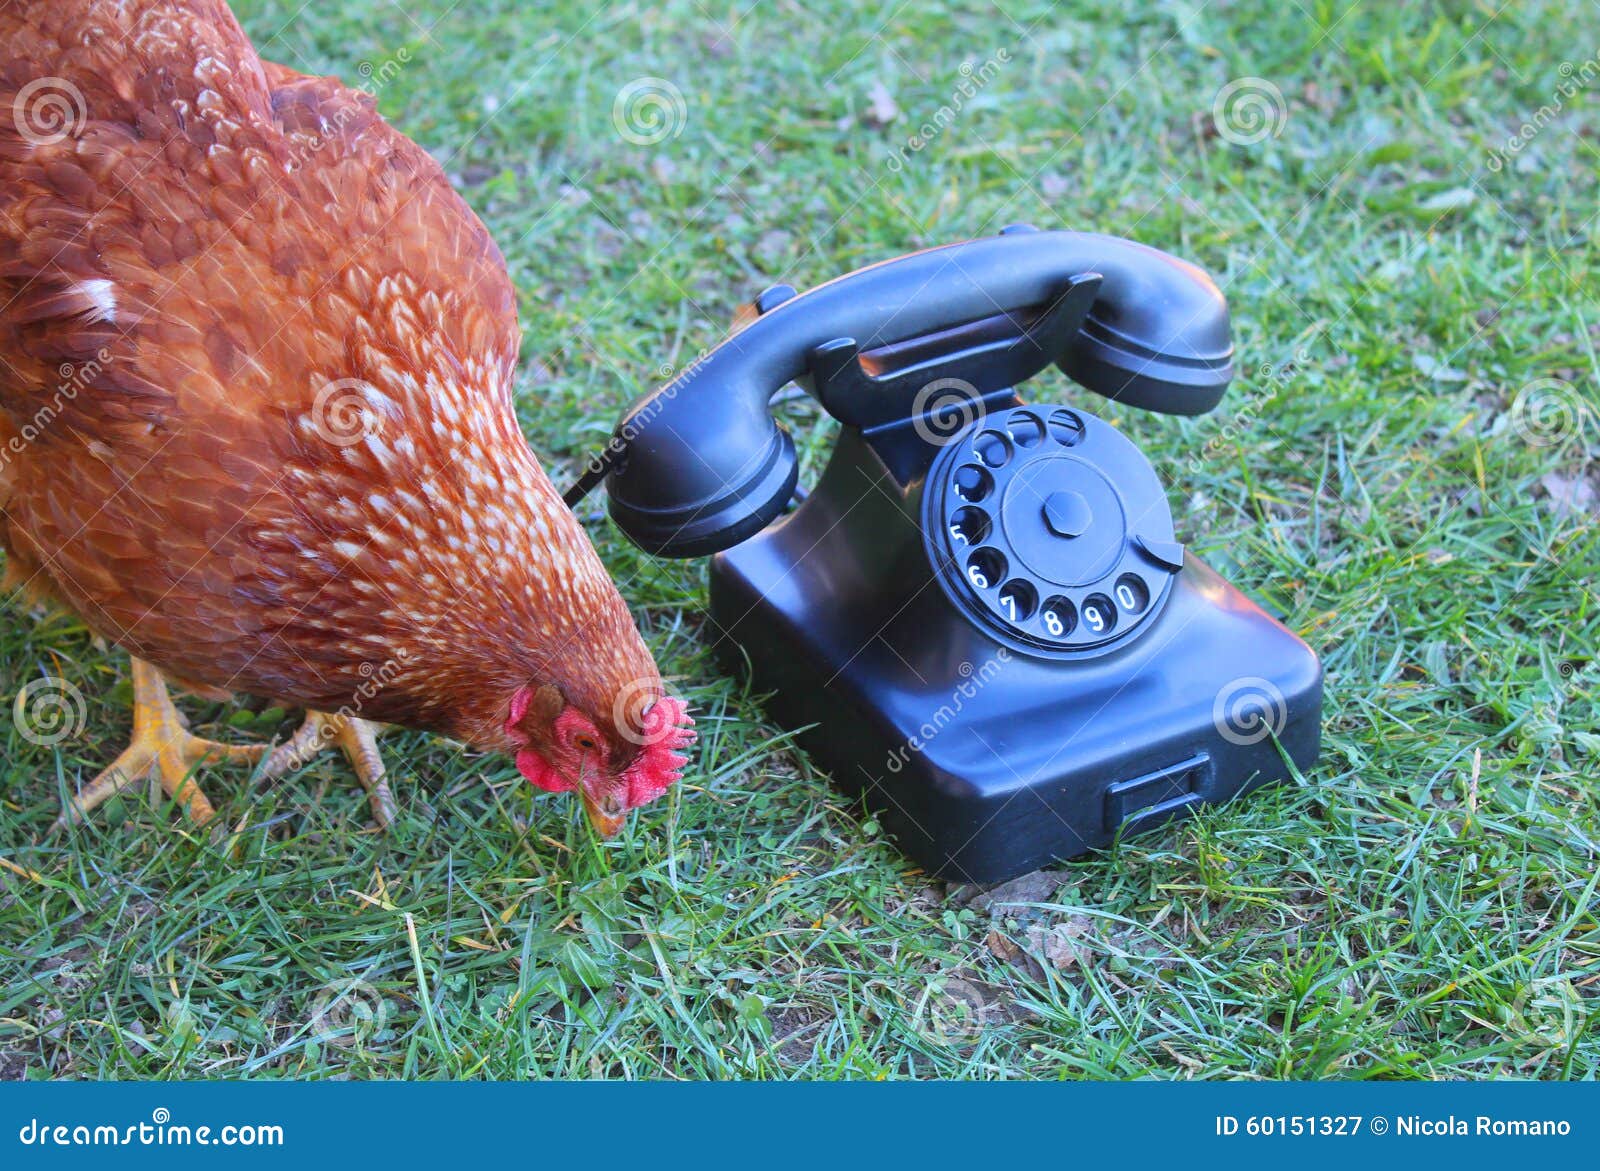 Курье телефон. Курица с телефоном. Курочка с телефоном. Кура с телефоном. Куры с телефоном смешные.